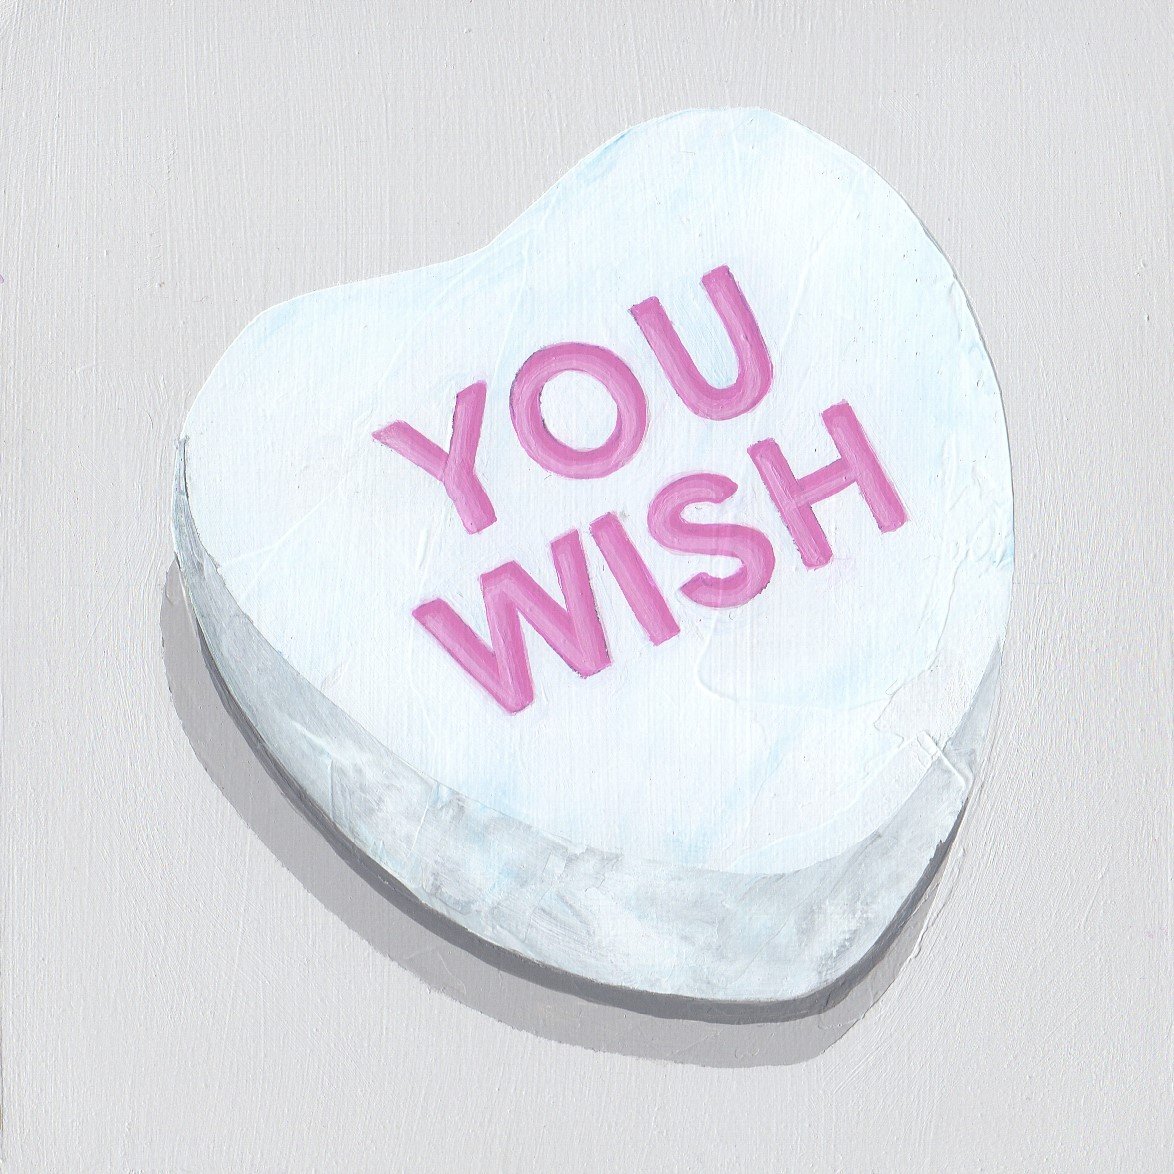 Conversation Heart Single YOU WISH wintergreen by Nicci SevierVuyk.jpg